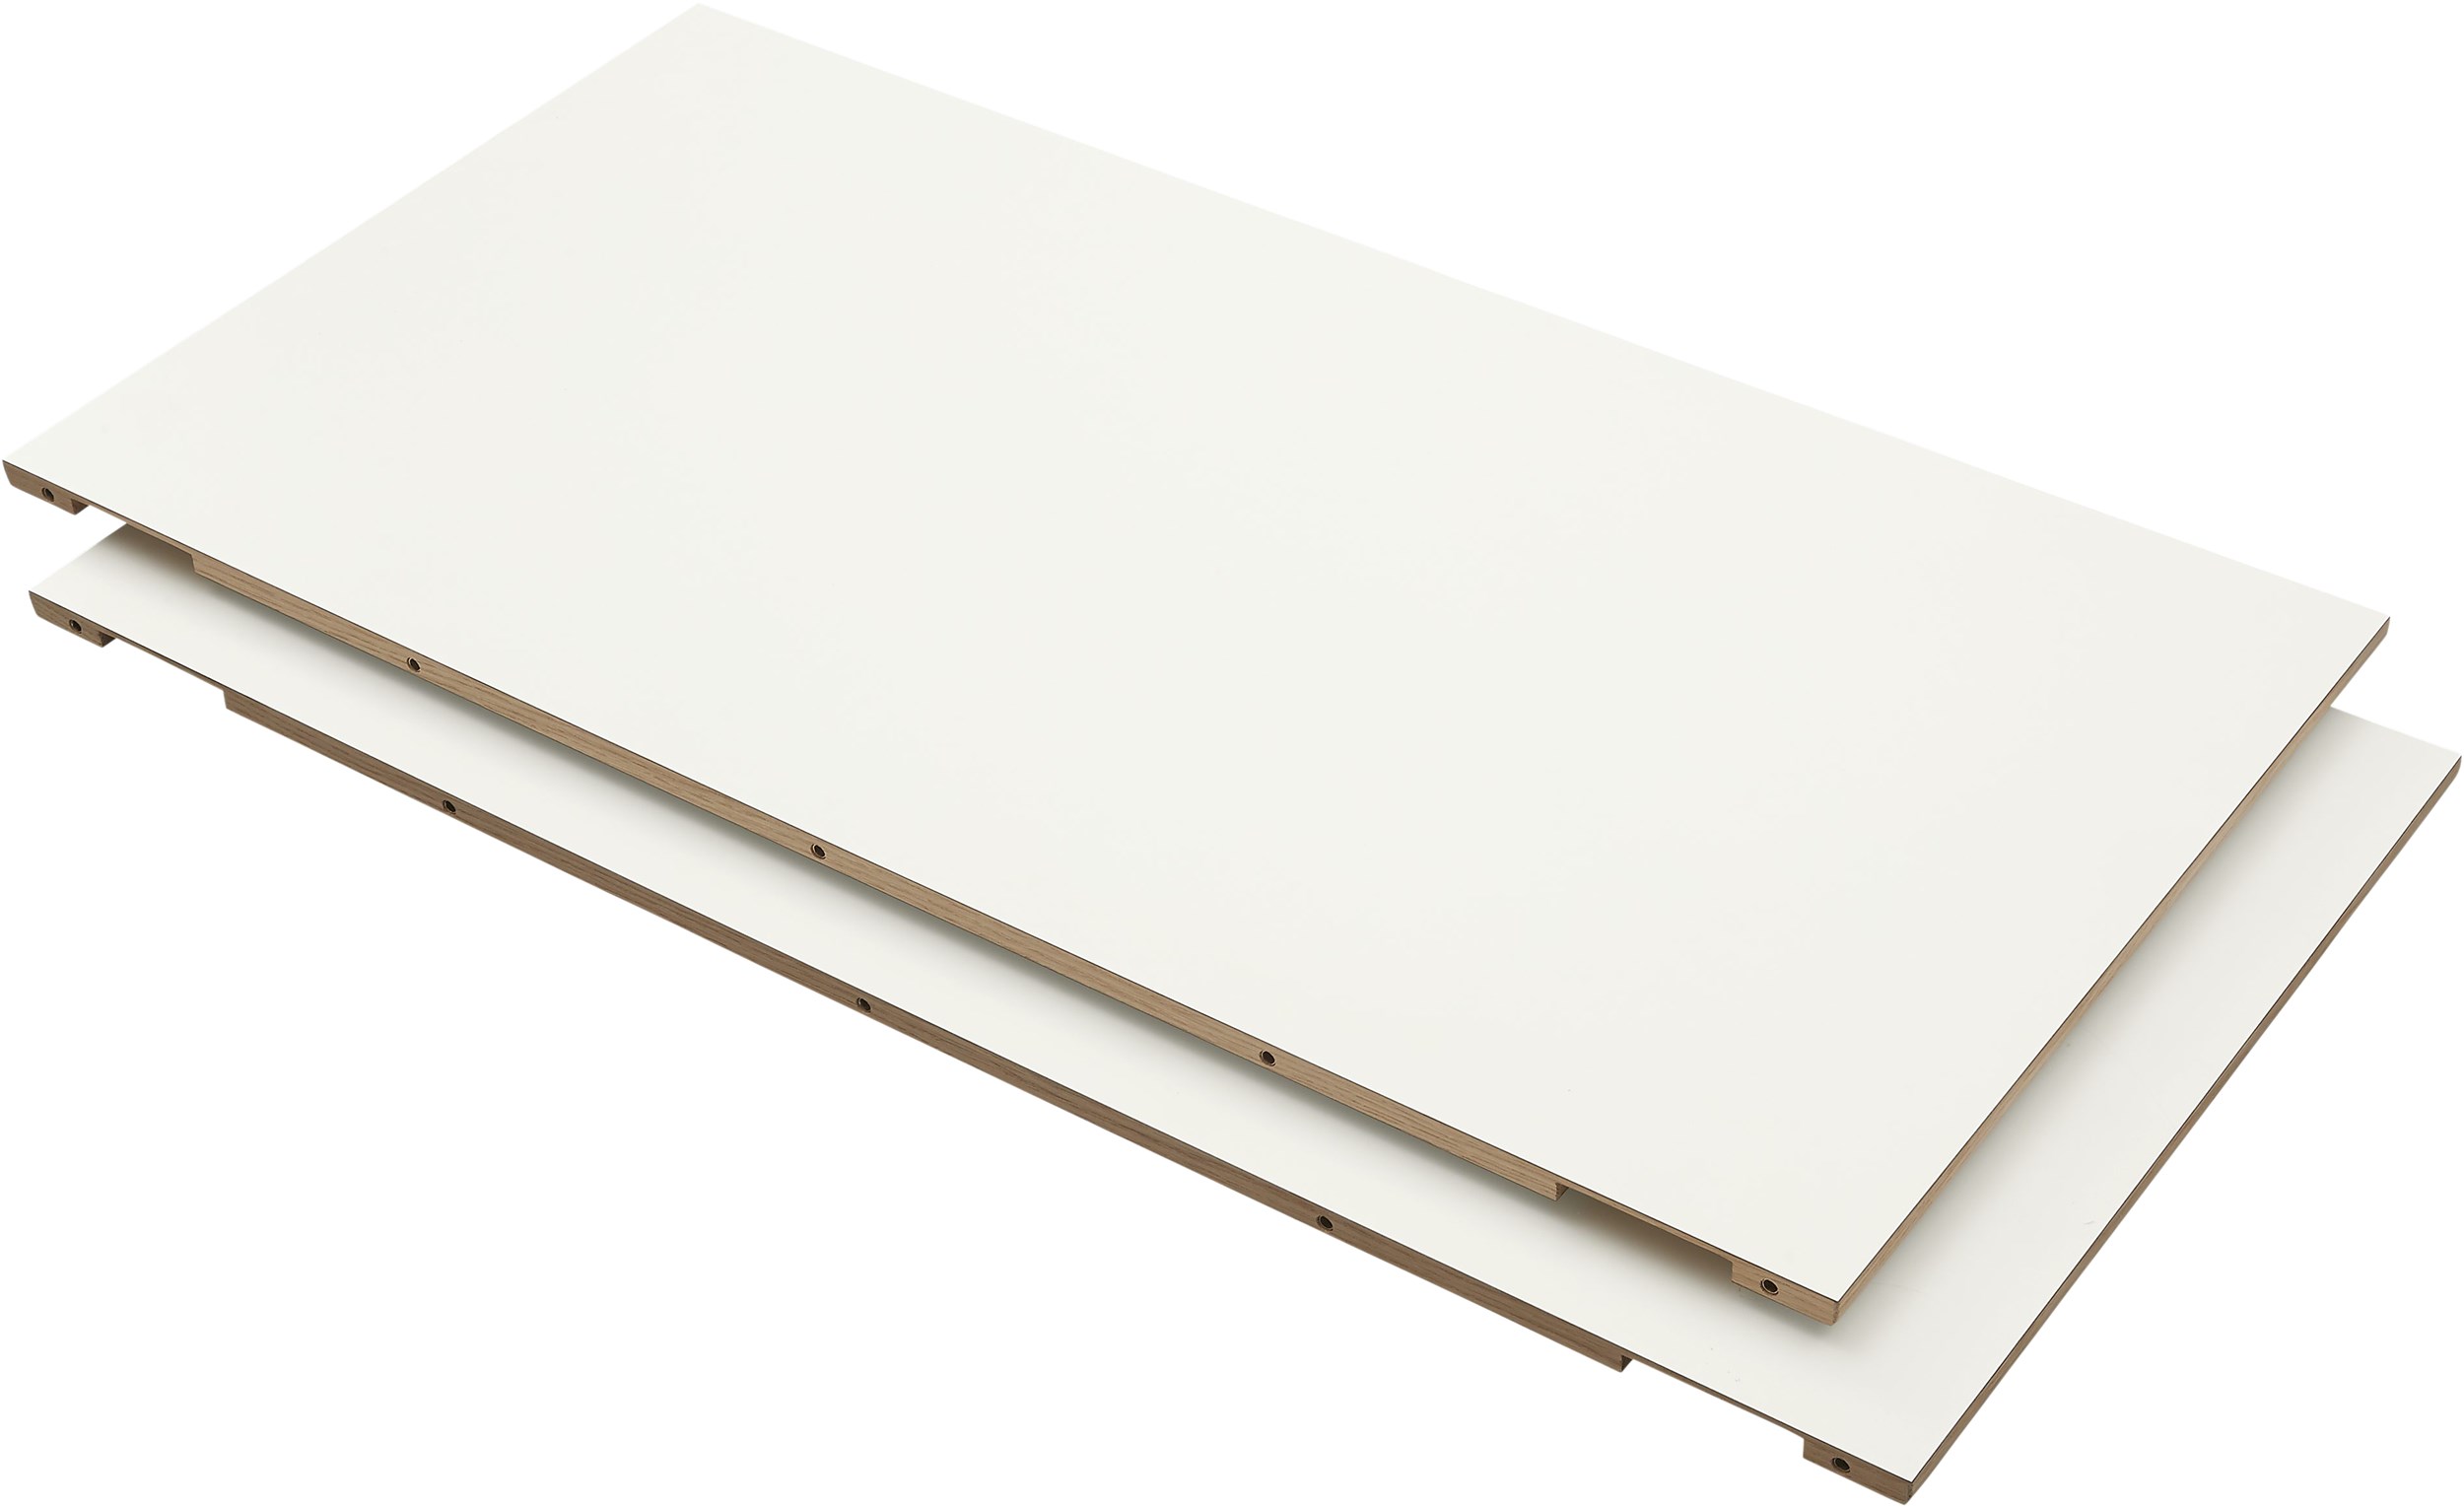 Edge Tillægsplade 49 x 95 cm - 101 White højtrykslaminat, kant i hvidpigmenteret matlakeret eg og 2 stk.